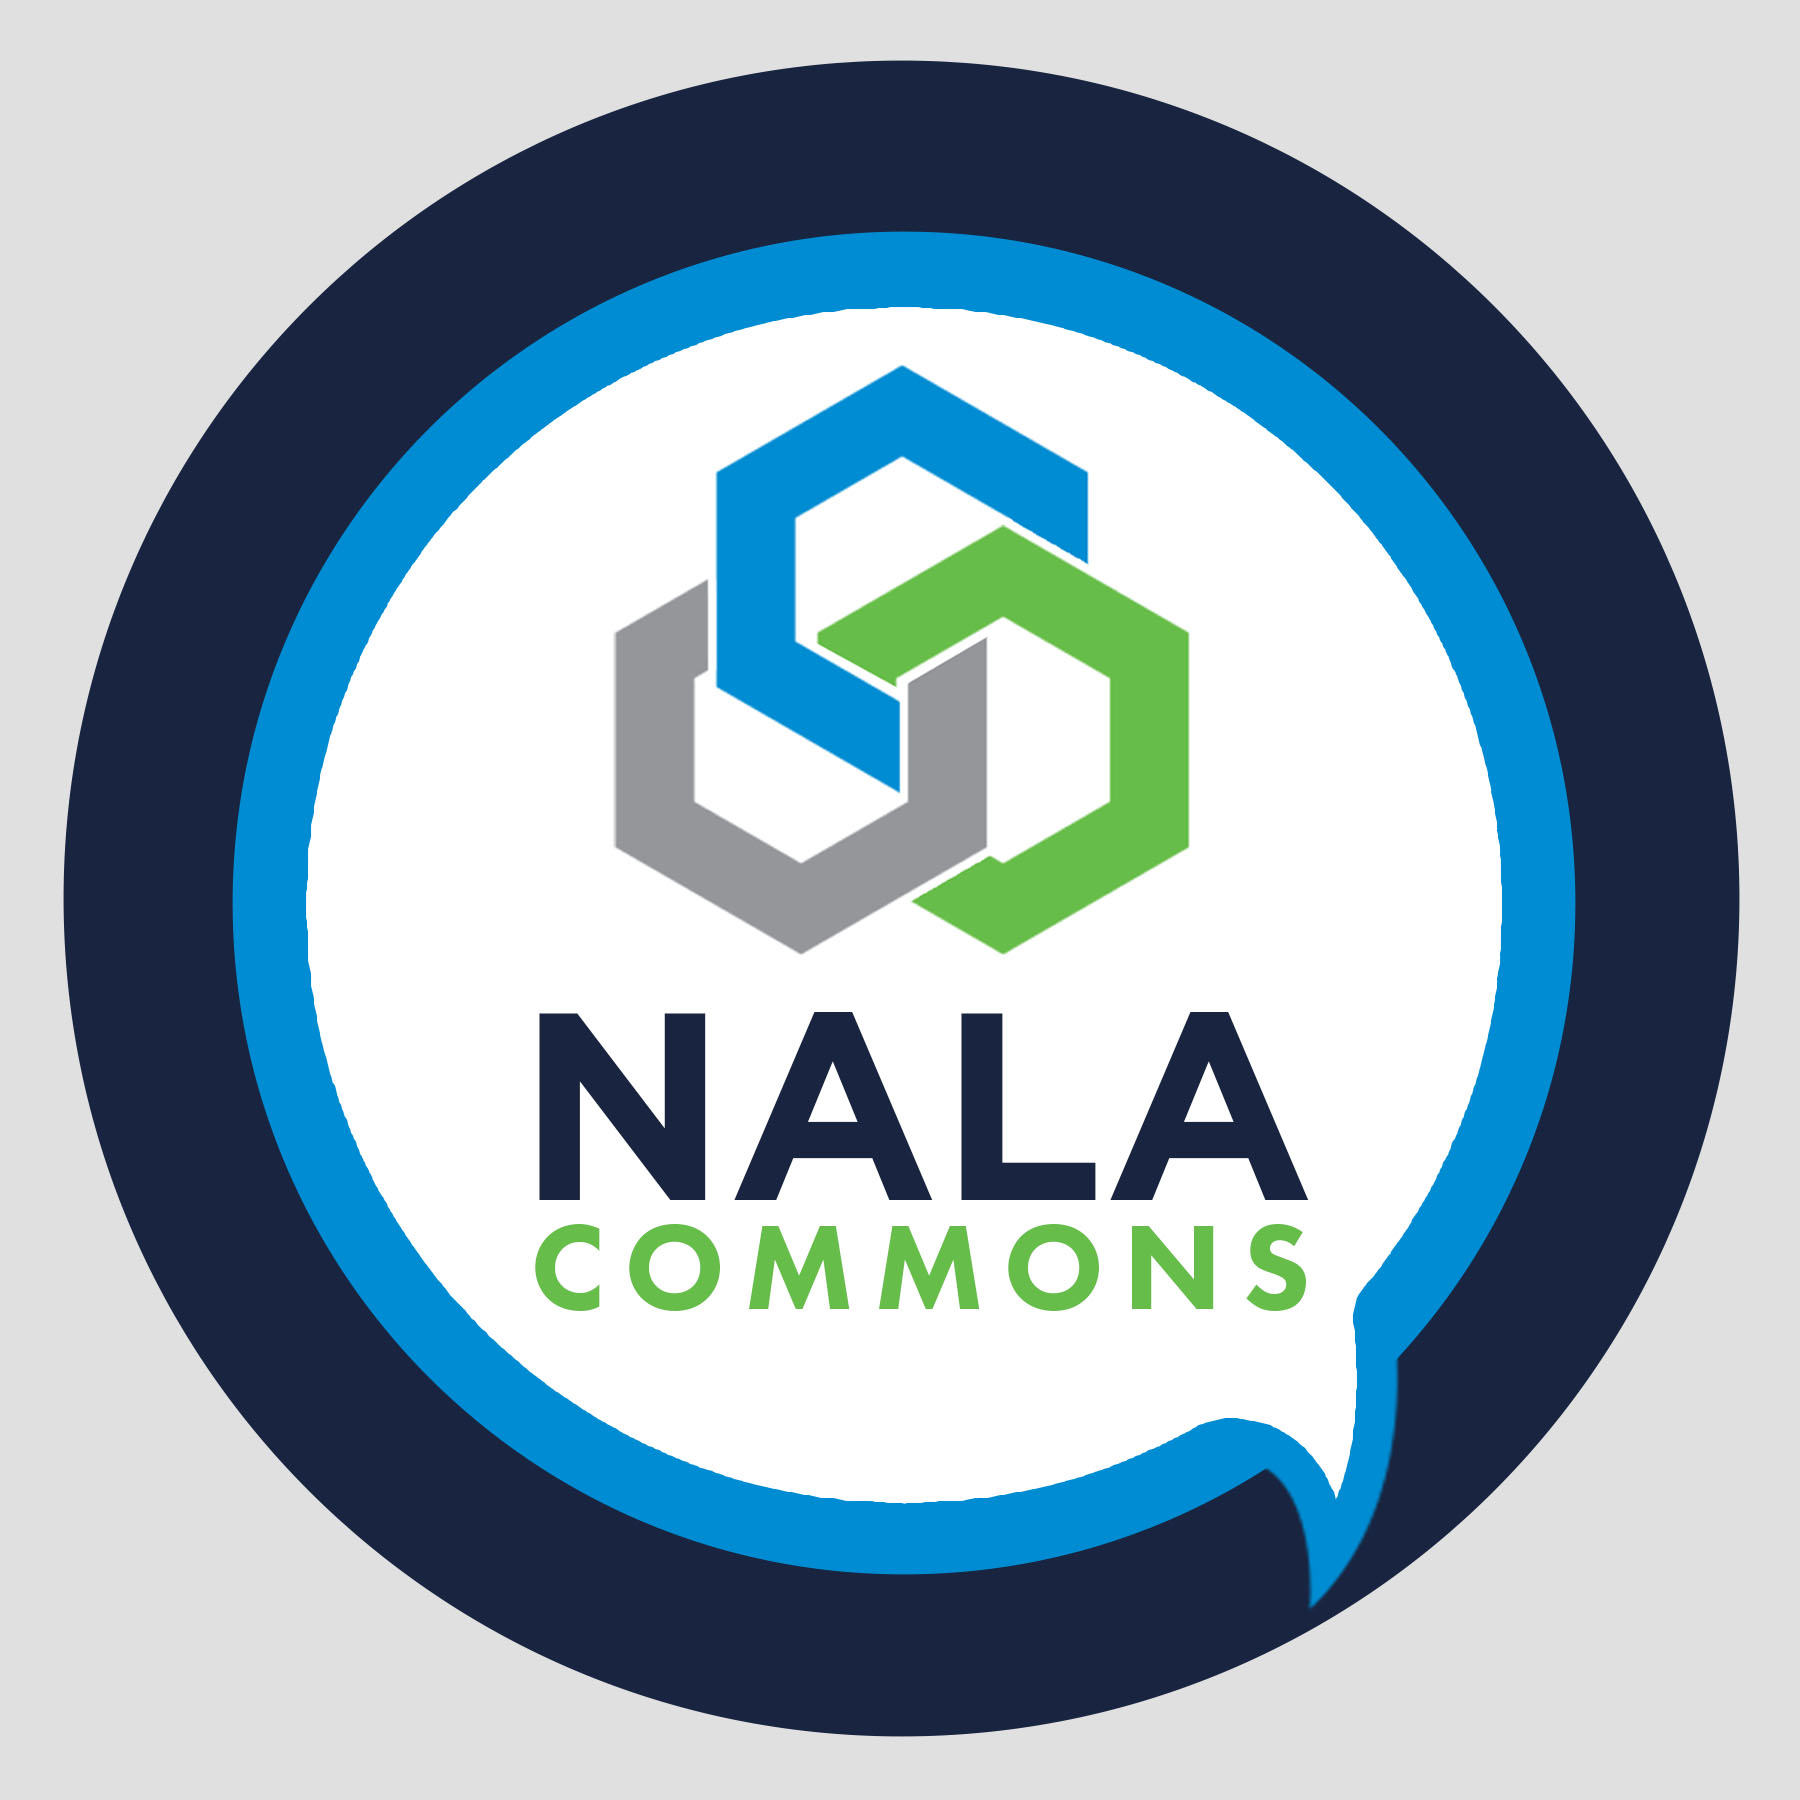 NALA Commons